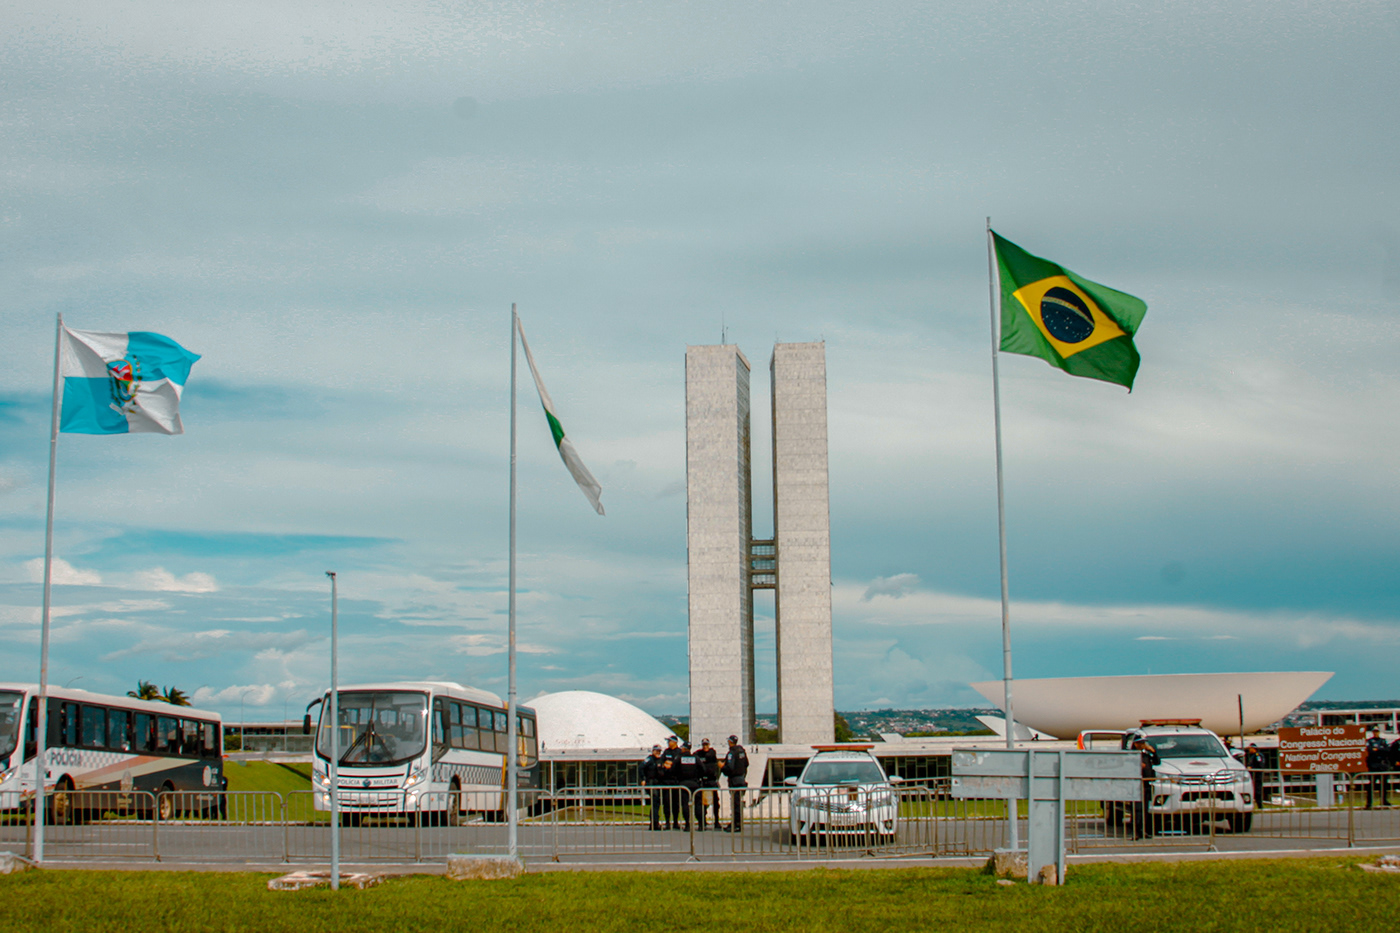 Brasil brasilia congresso nacional Fotografía Documental fotografia politica fotojornalismo Photography  Politica terrorismo vandalismo